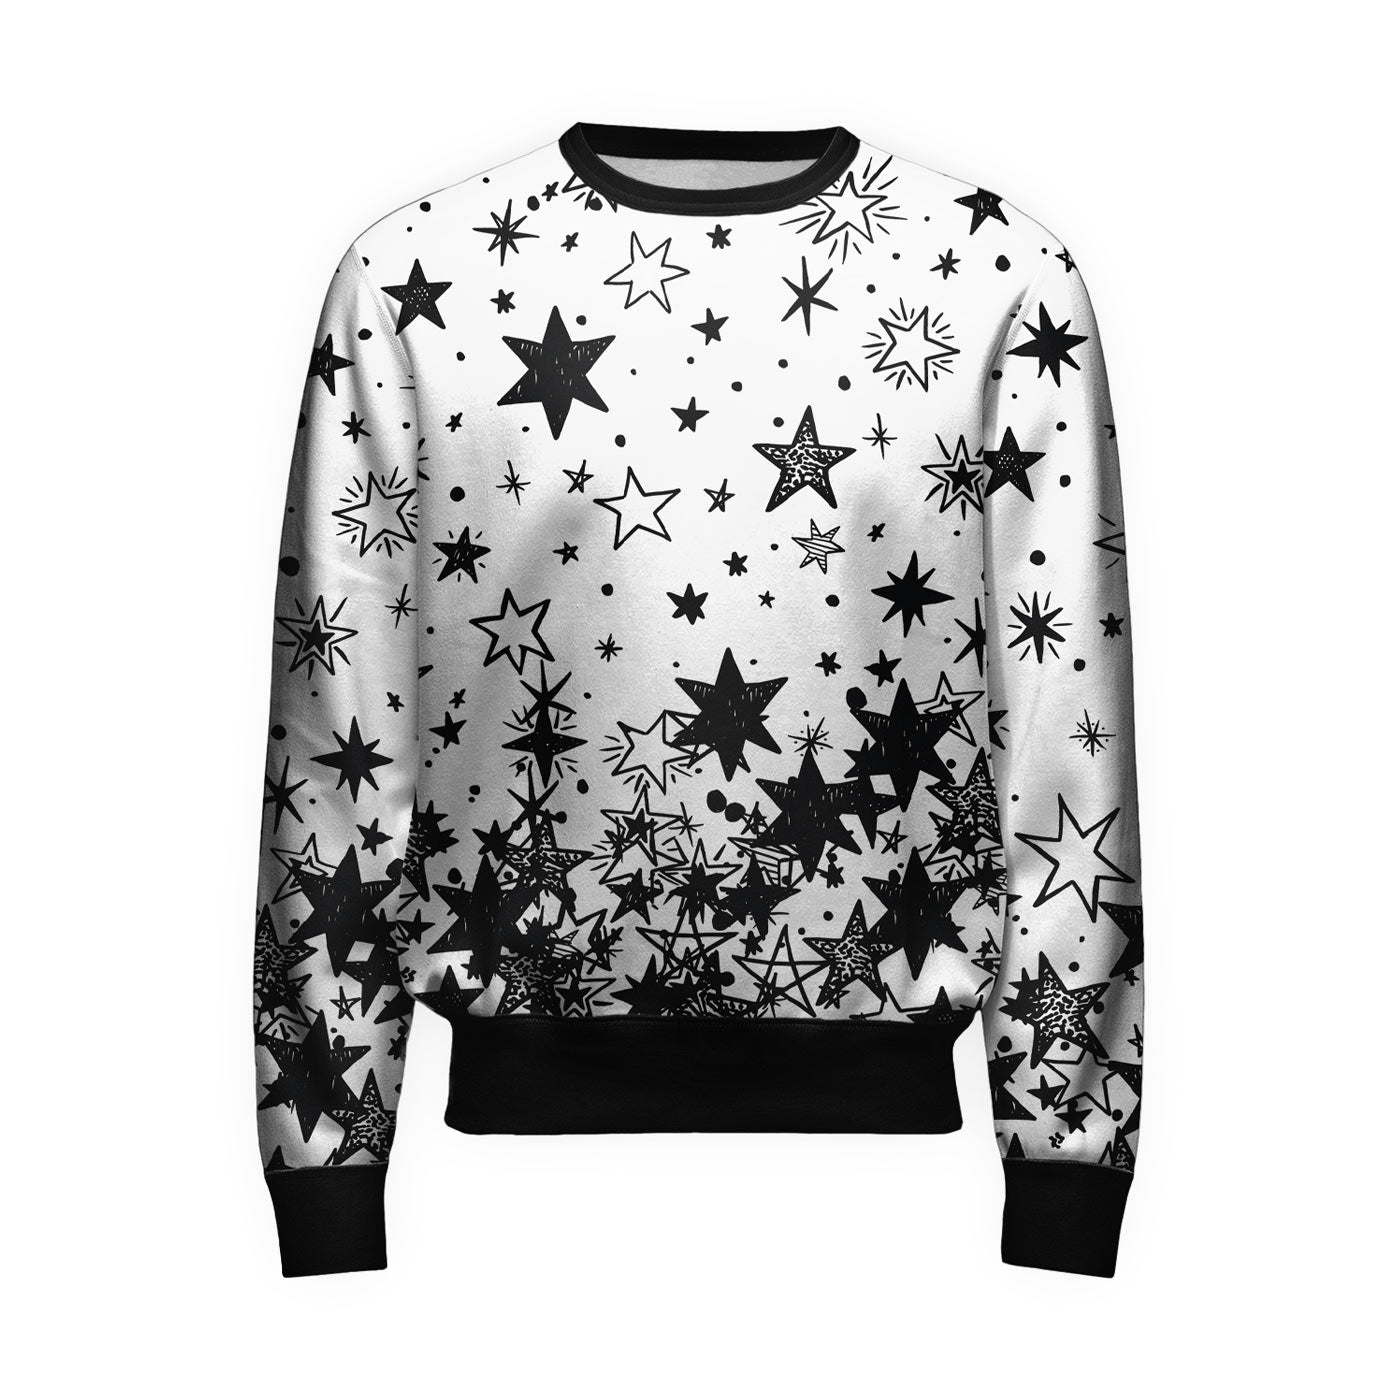 Falling Star Sweatshirt